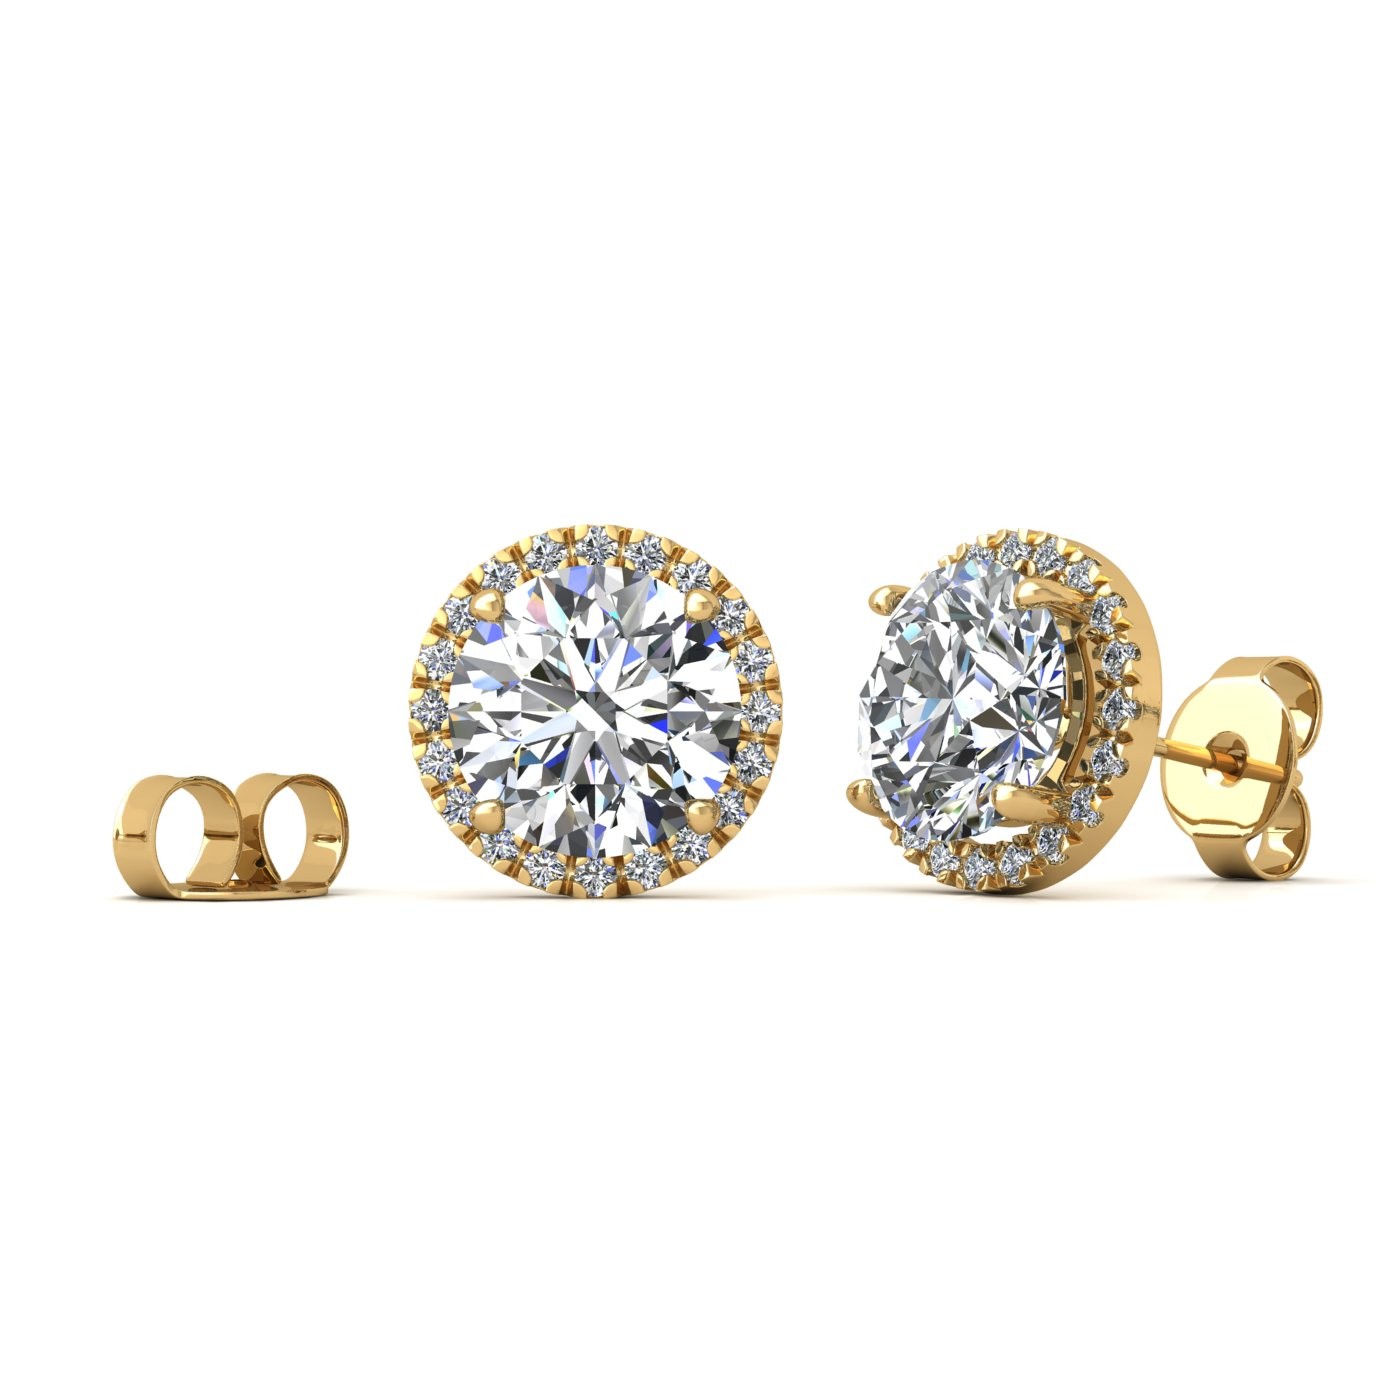 18k yellow gold  2,5 ct each (5,0 tcw) 4 prongs round shape diamond earrings with diamond pavÉ set halo Photos & images